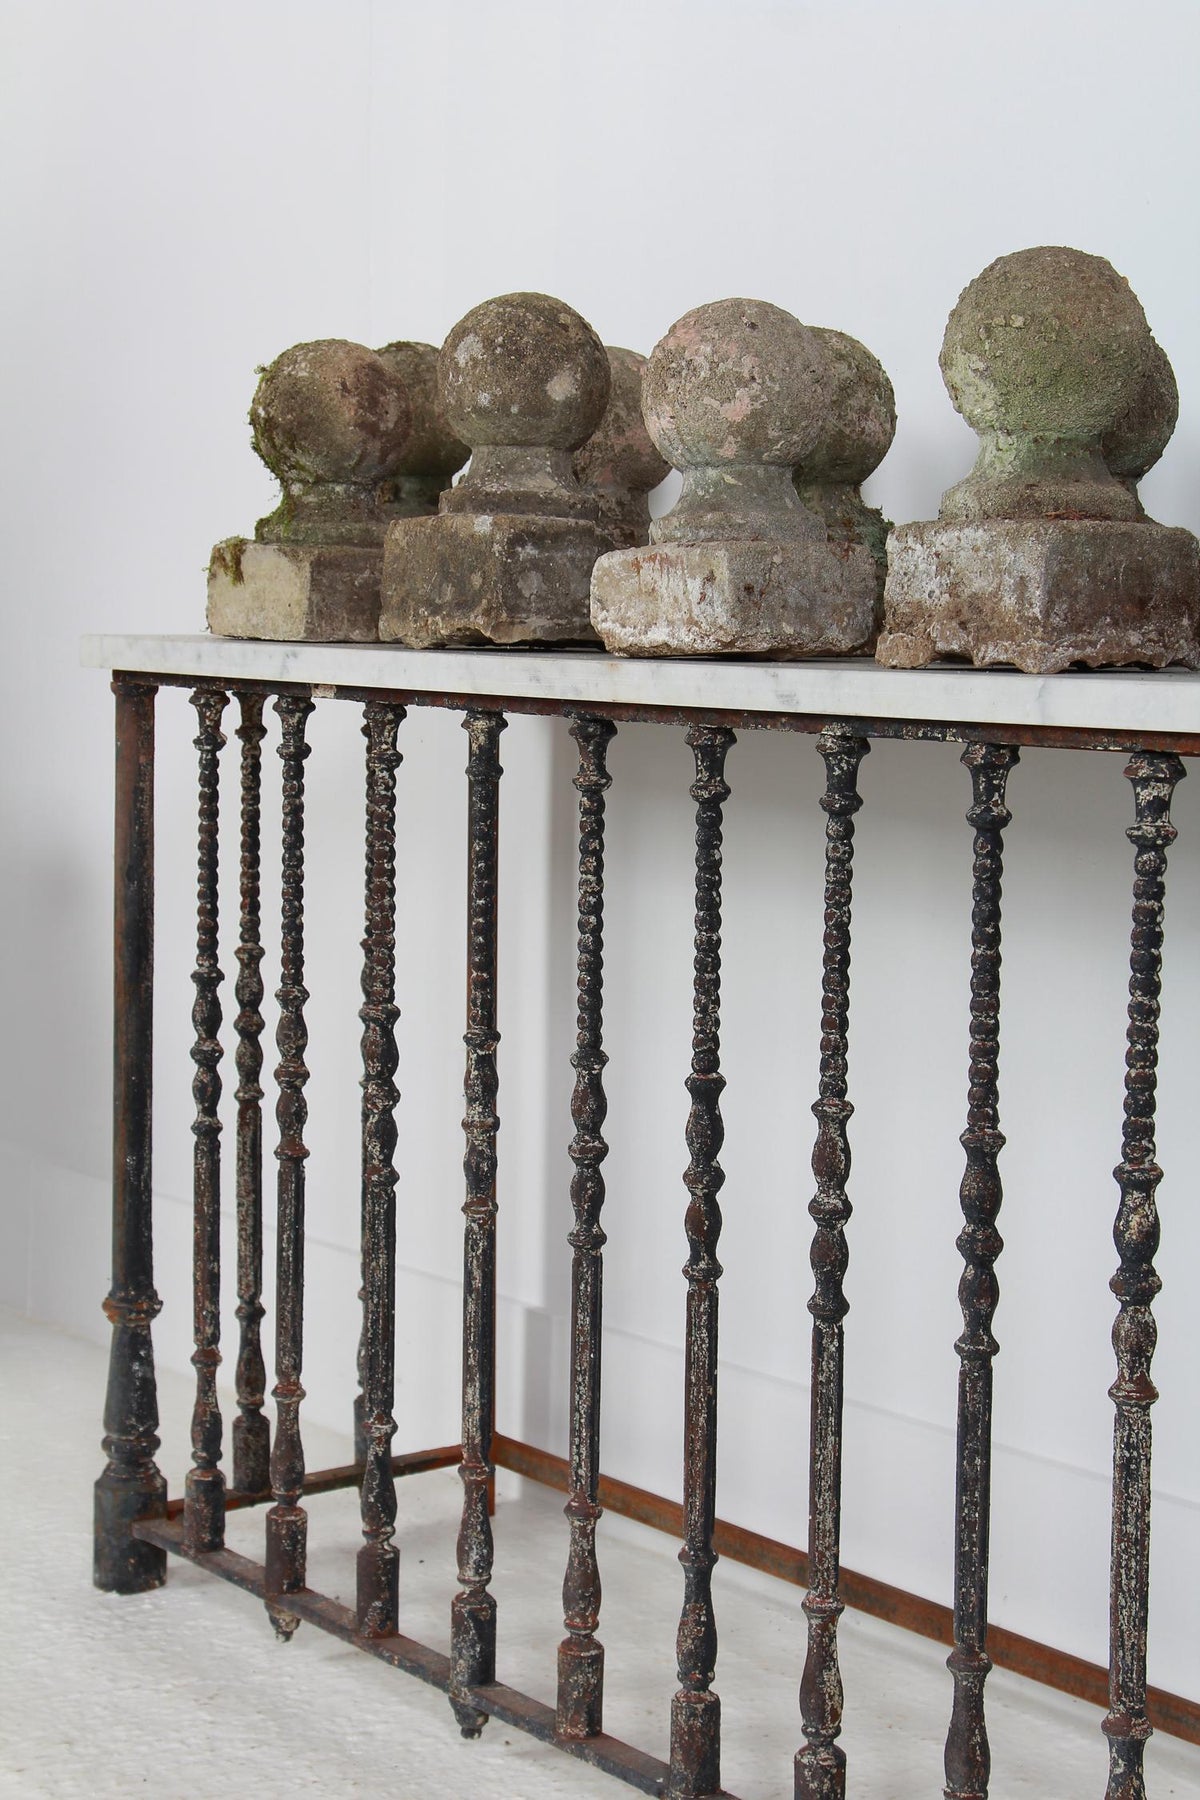 Collection of Decorative Lichen Encrusted Composite Garden Balls